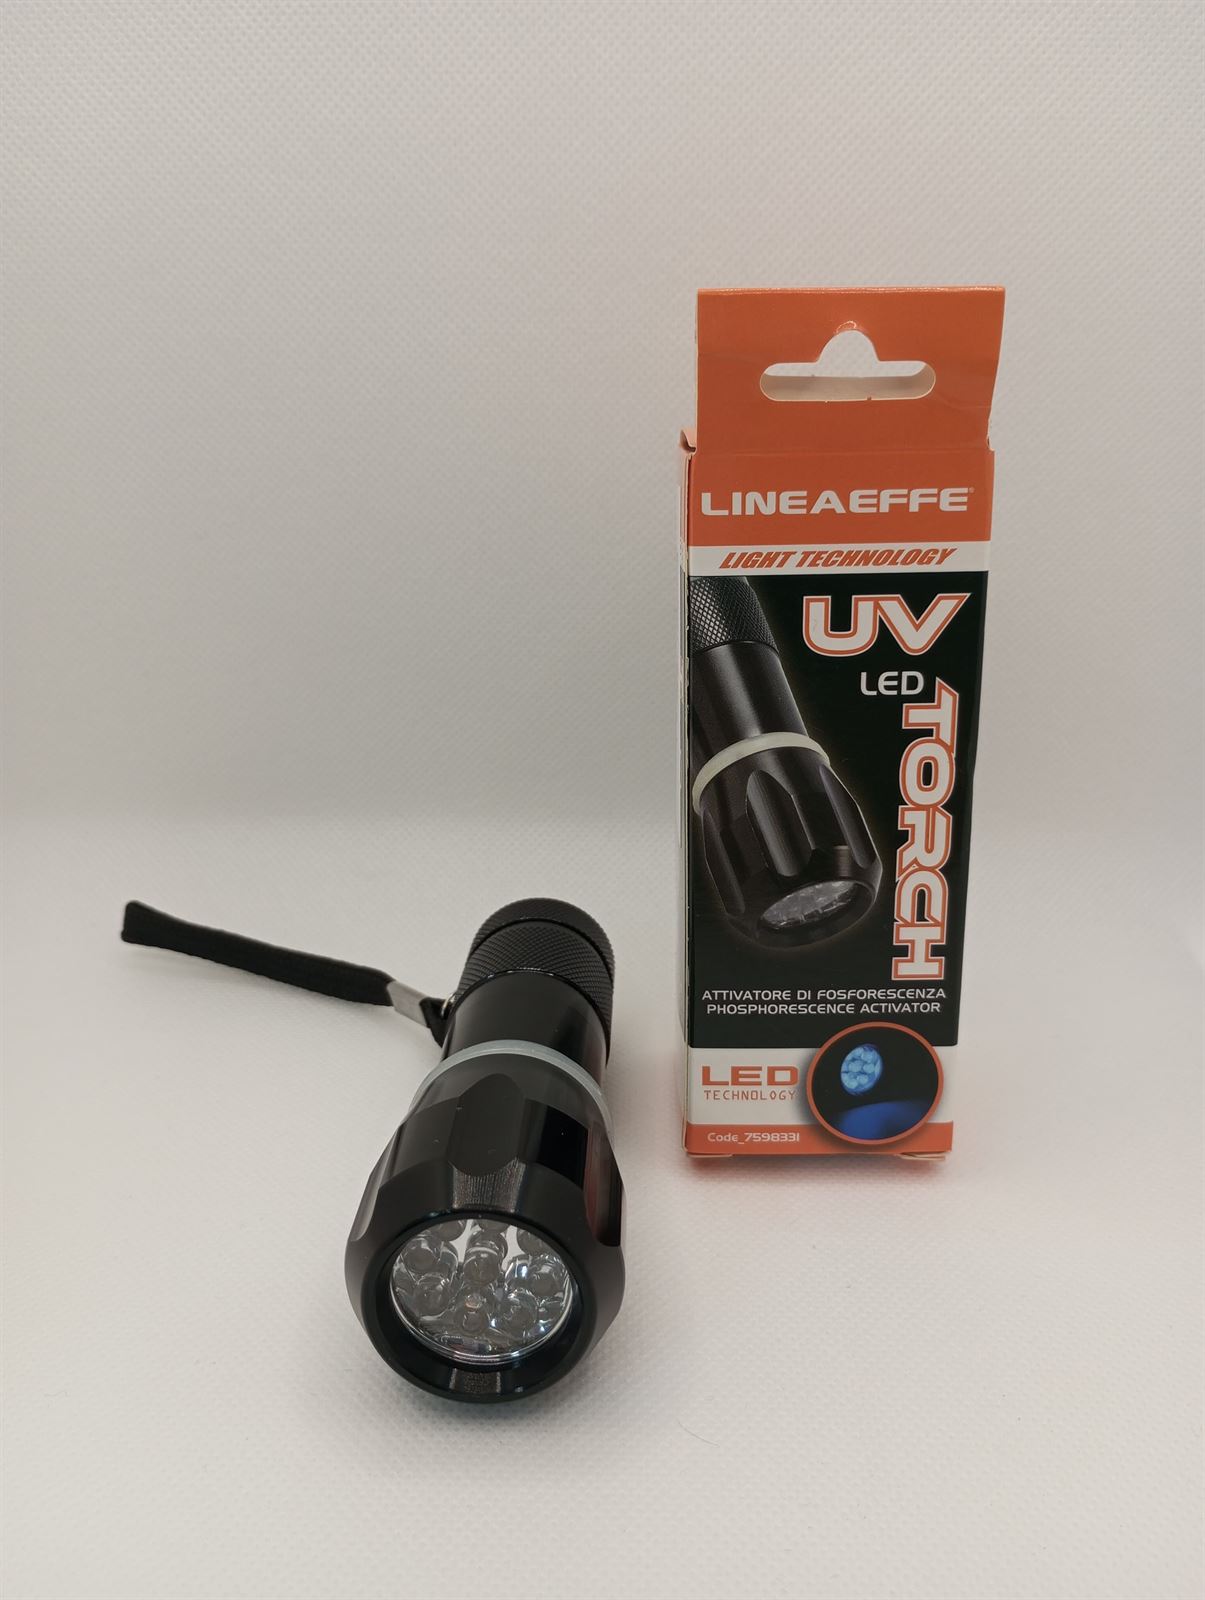 LINTERNA UV LED DE LINEA EFFE - Imagen 1